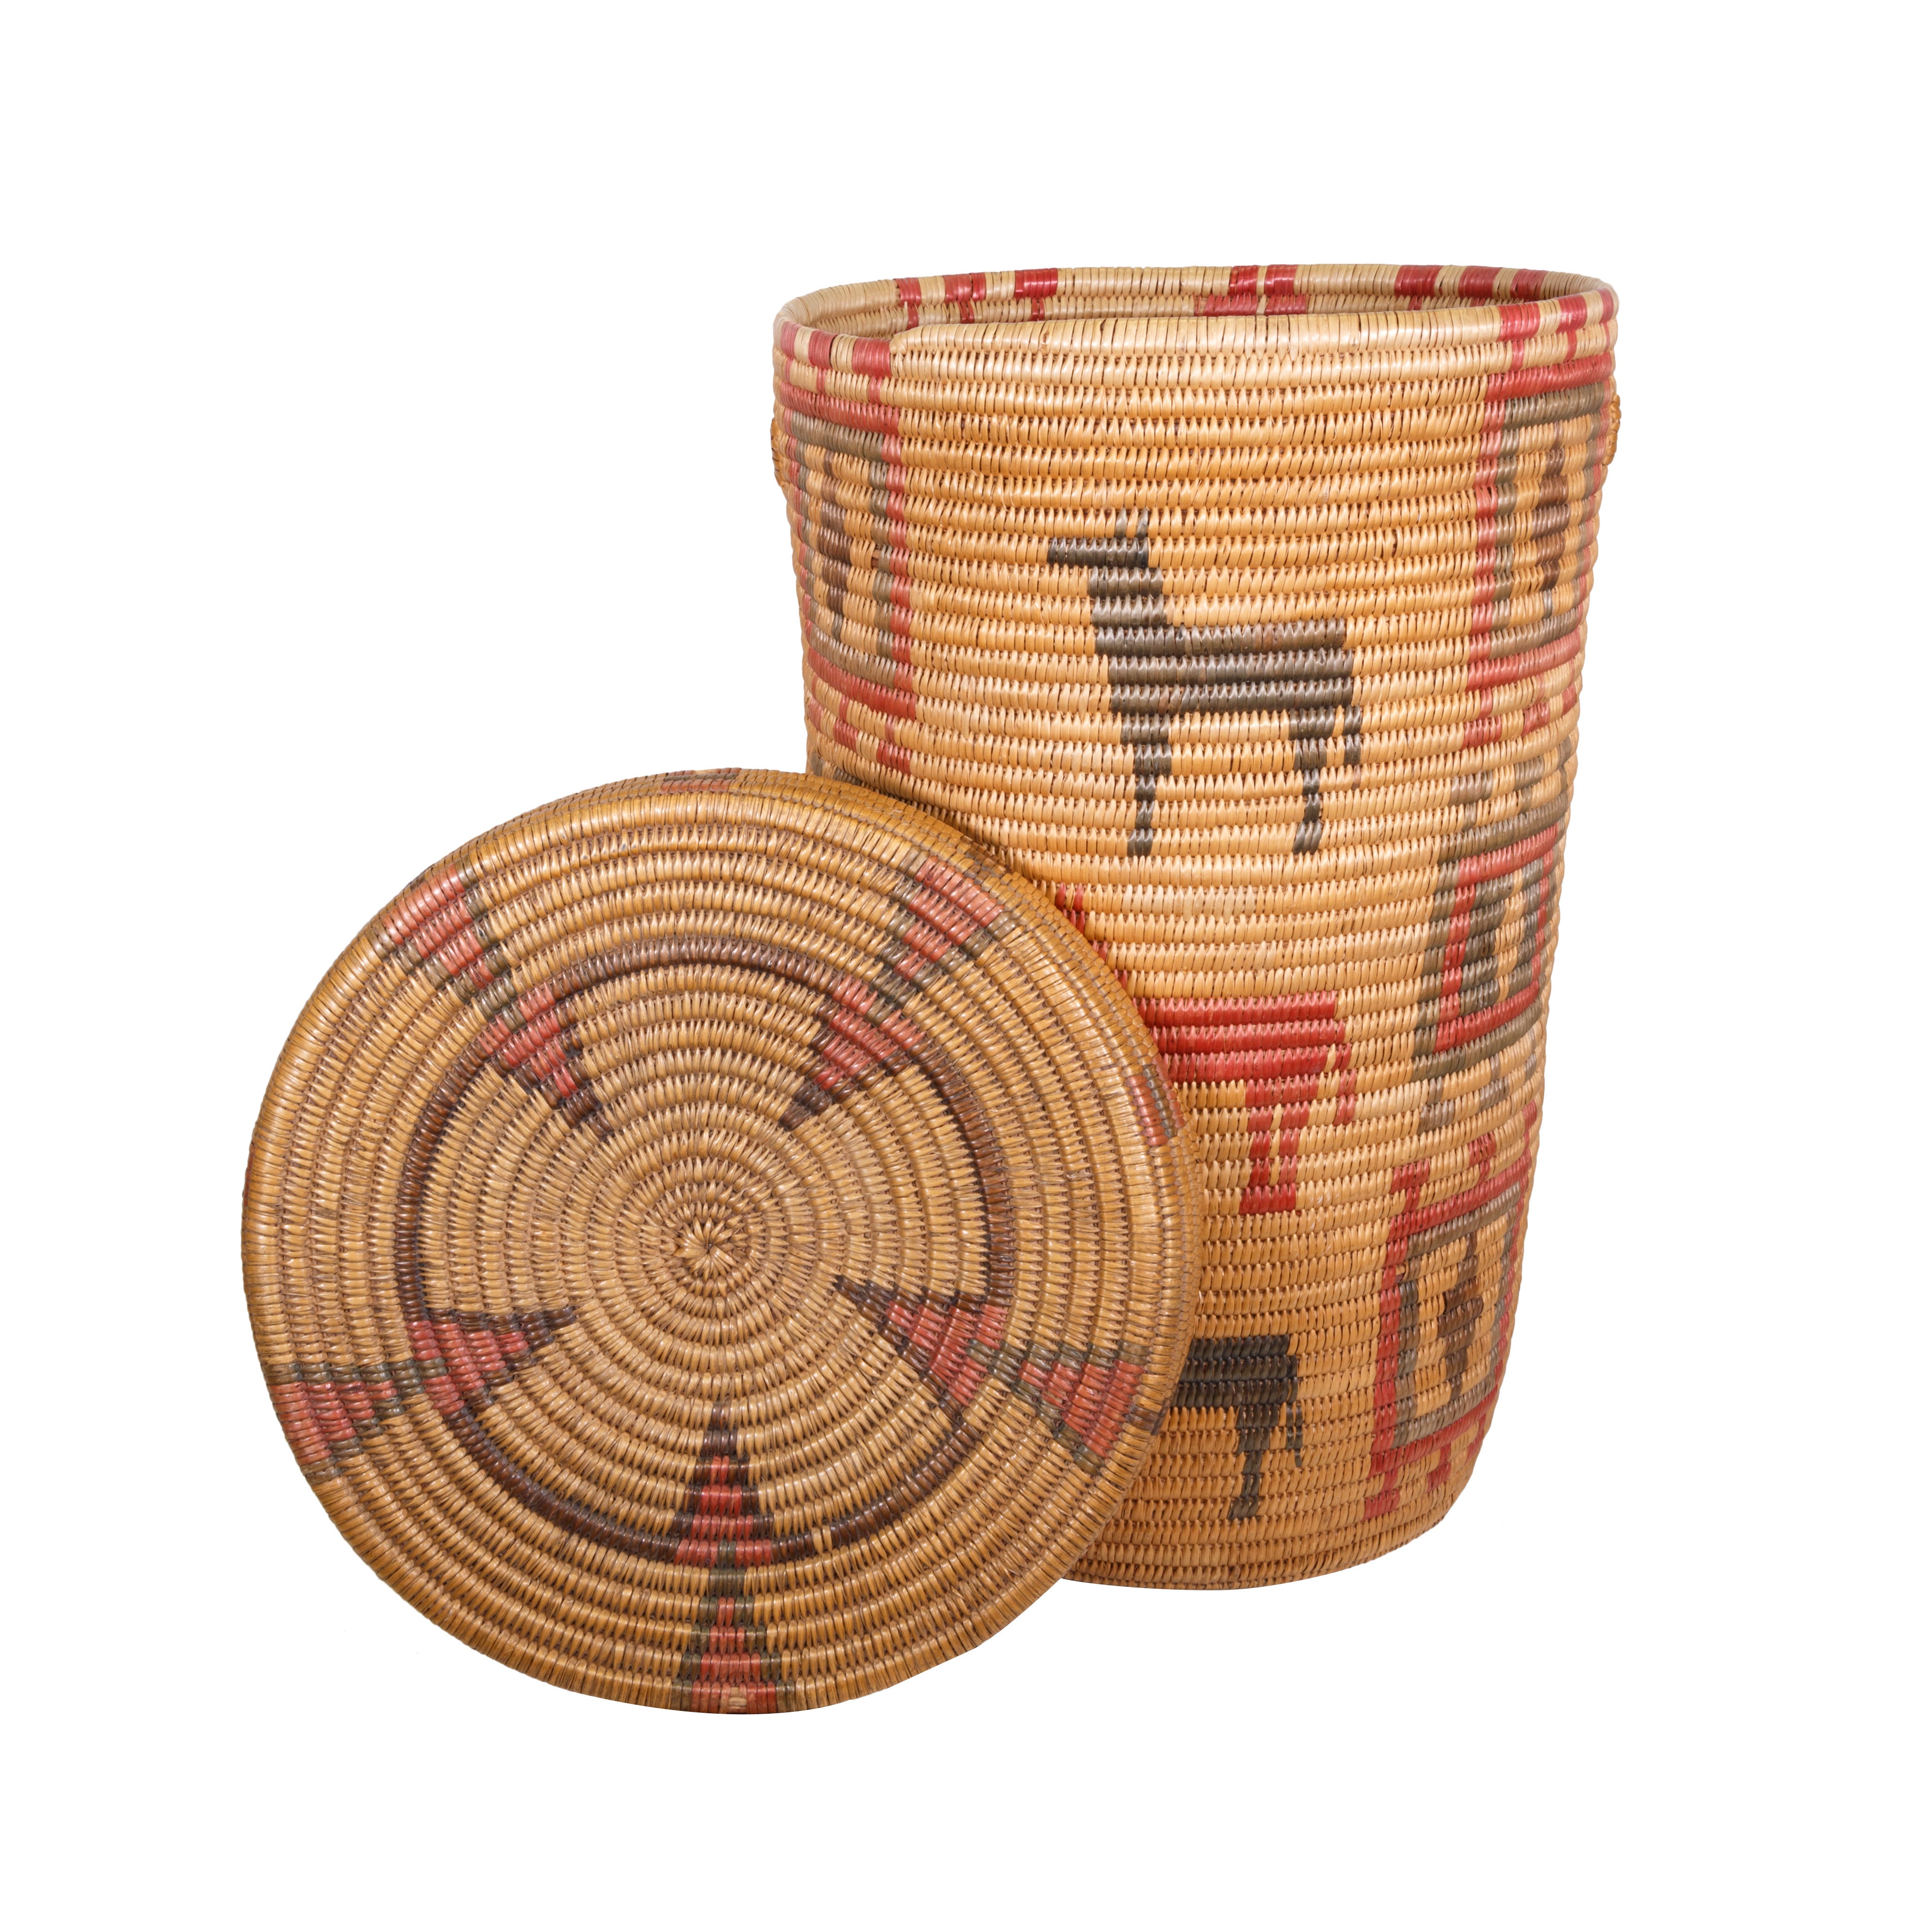 Jicarilla Apache Lidded Basket